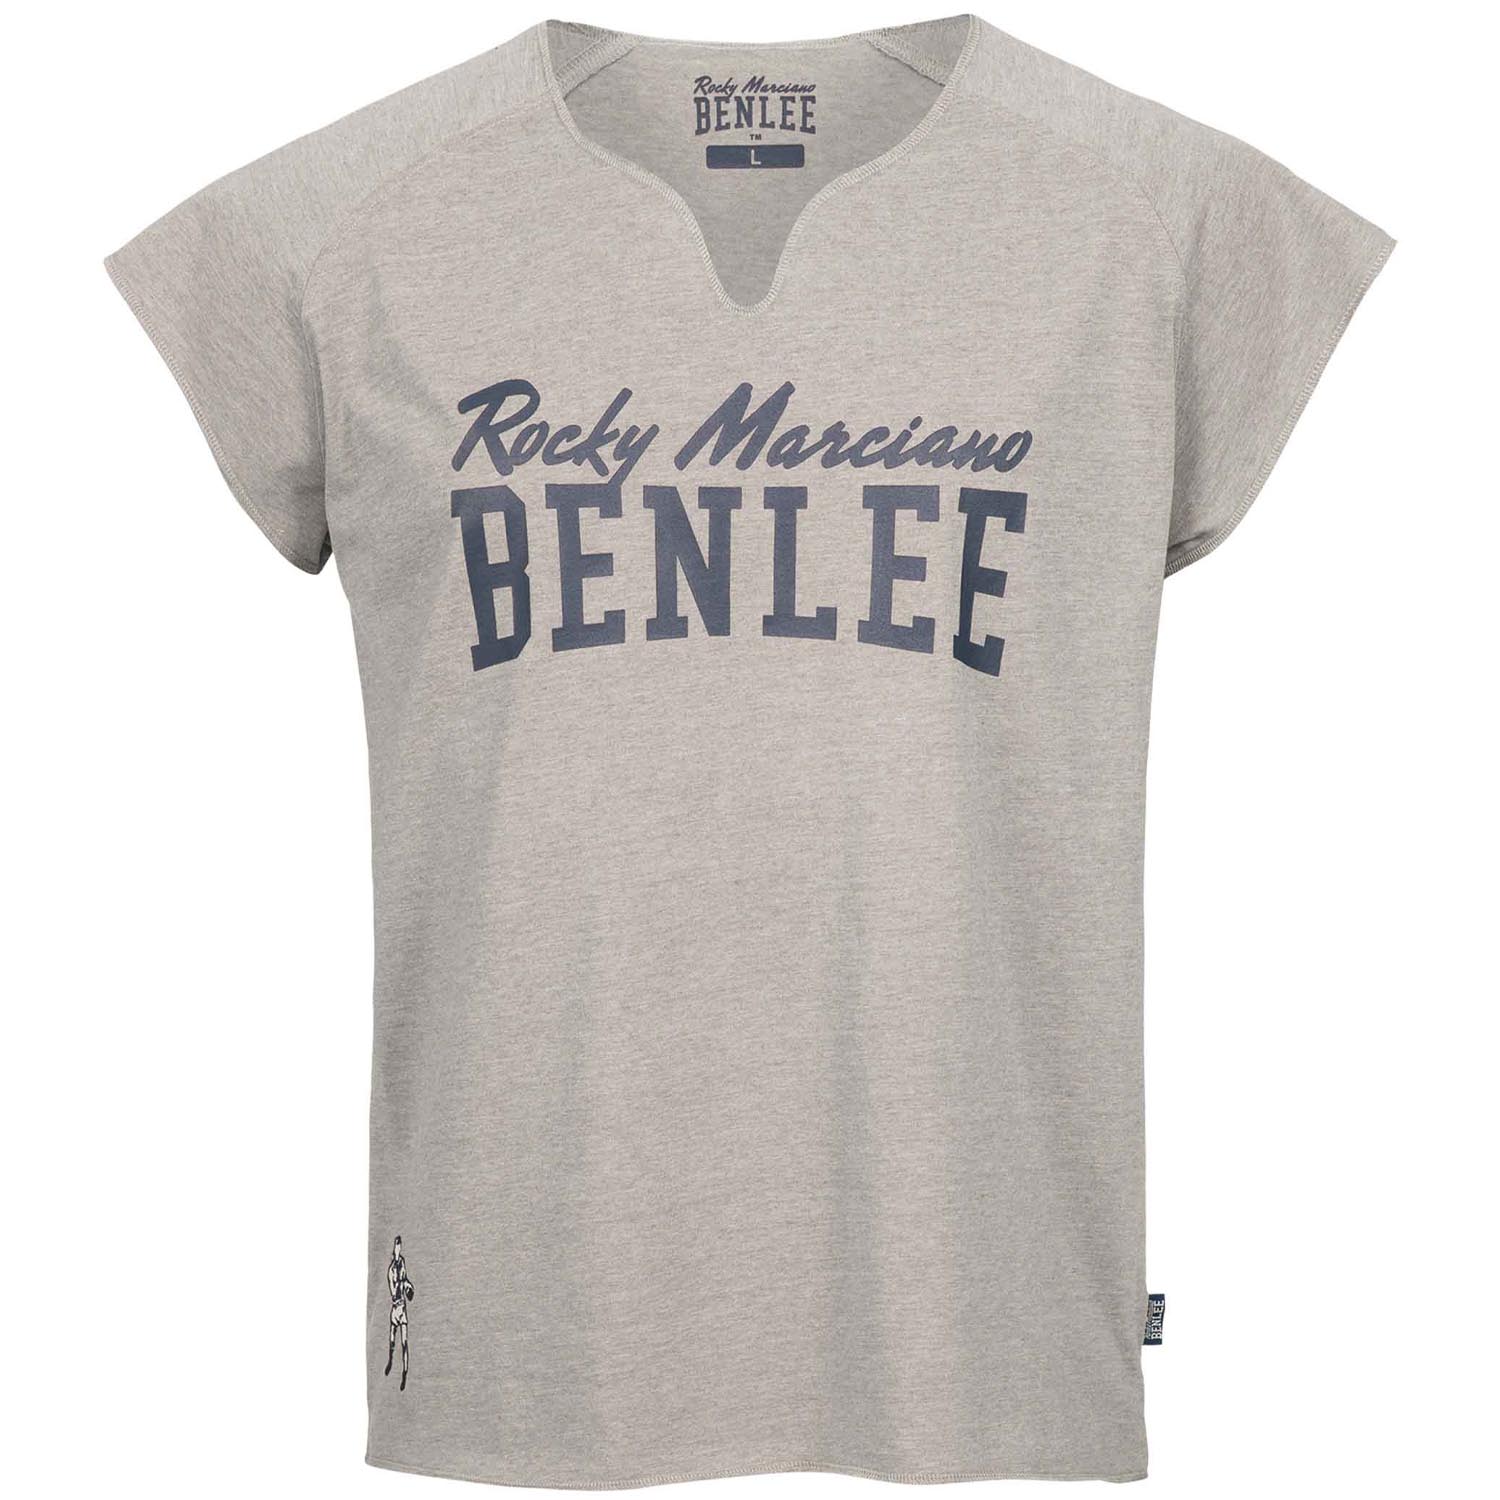 BENLEE T-Shirt Edwards, grey